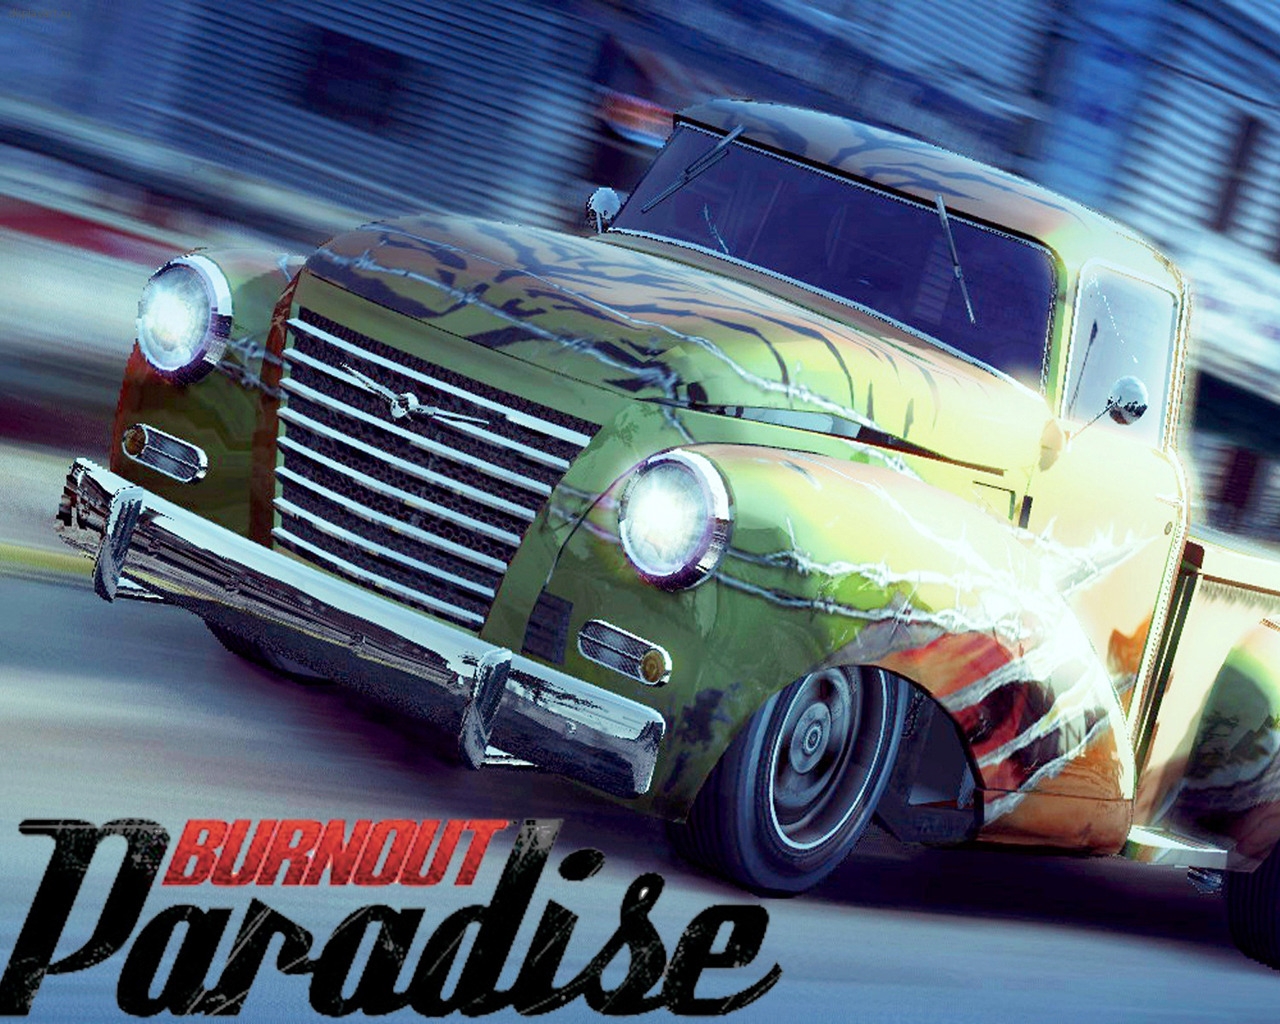 Burnout Paradise Car for 1280 x 1024 resolution